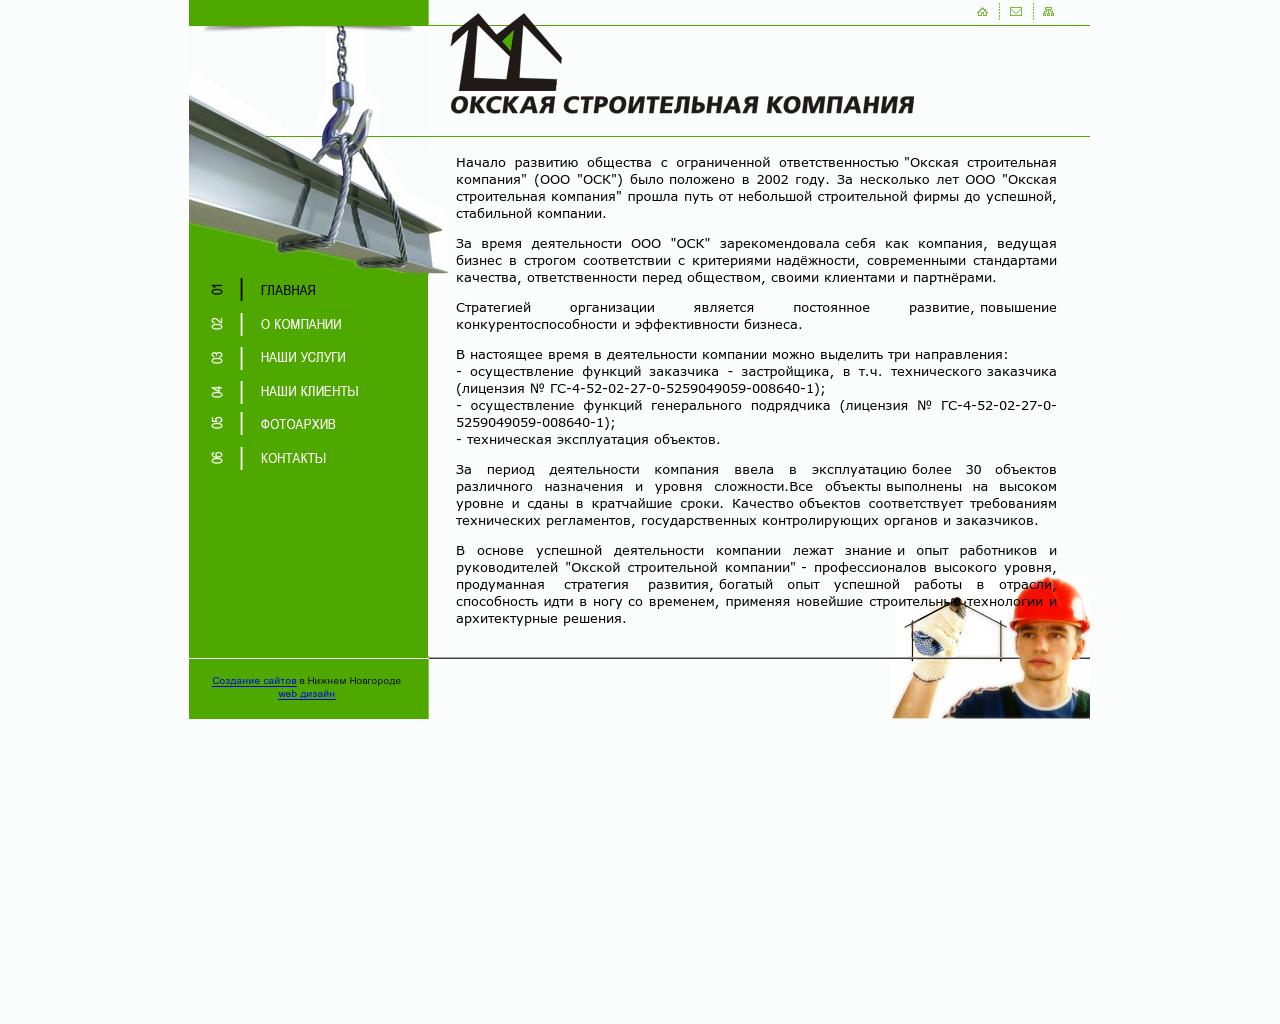 Изображение сайта osk-nn.ru в разрешении 1280x1024